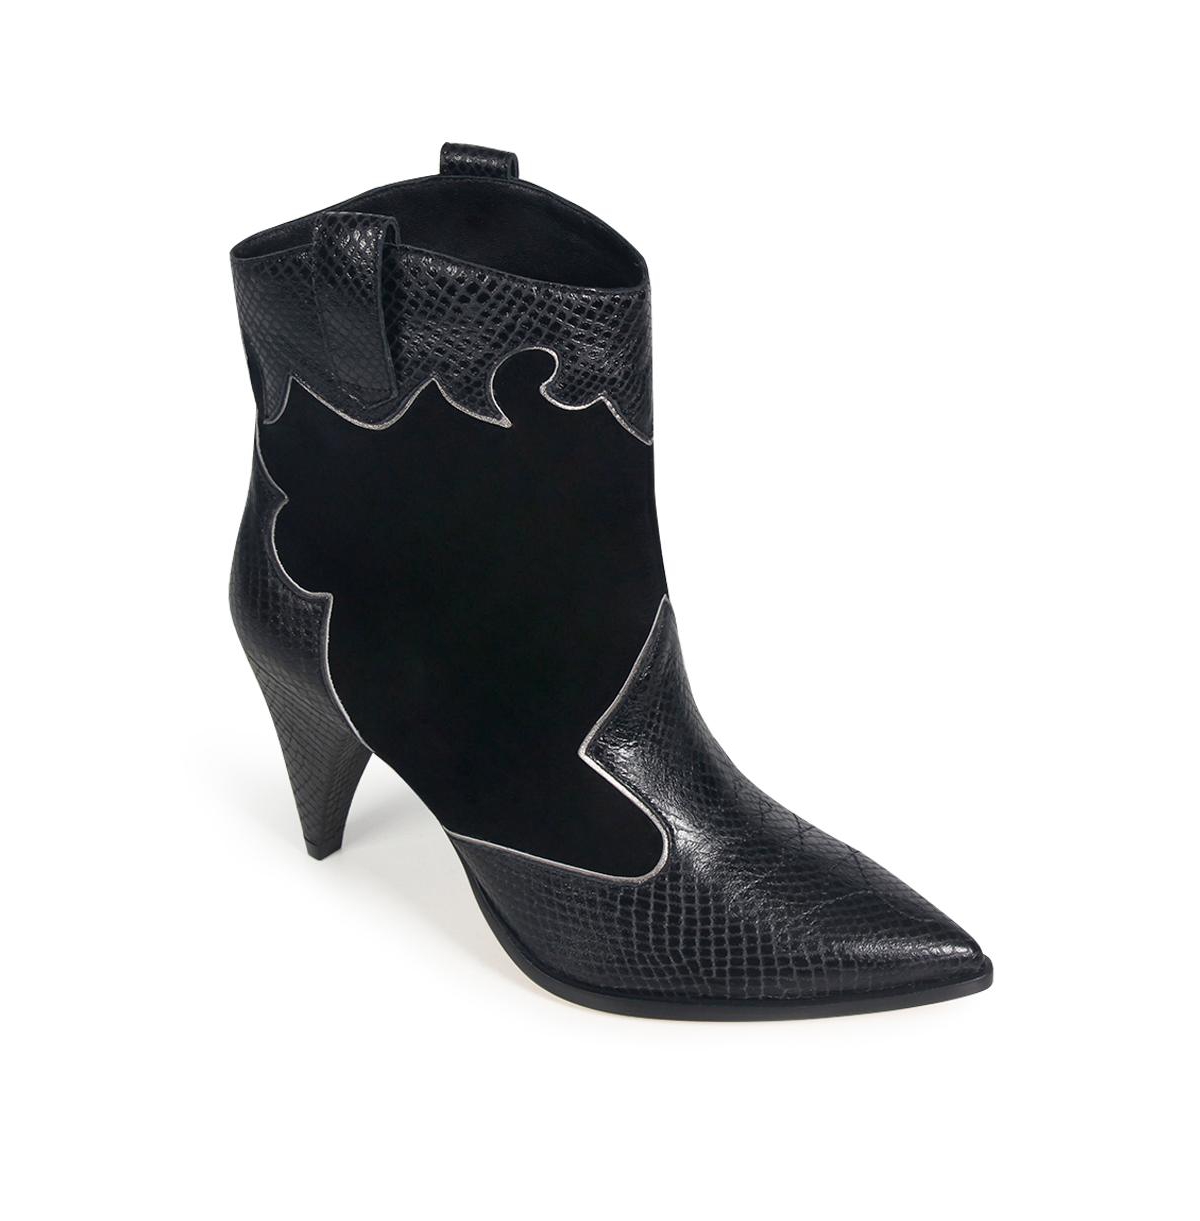 Shoes Women's Zurique Pointed-Toe Cowboy Booties - Black